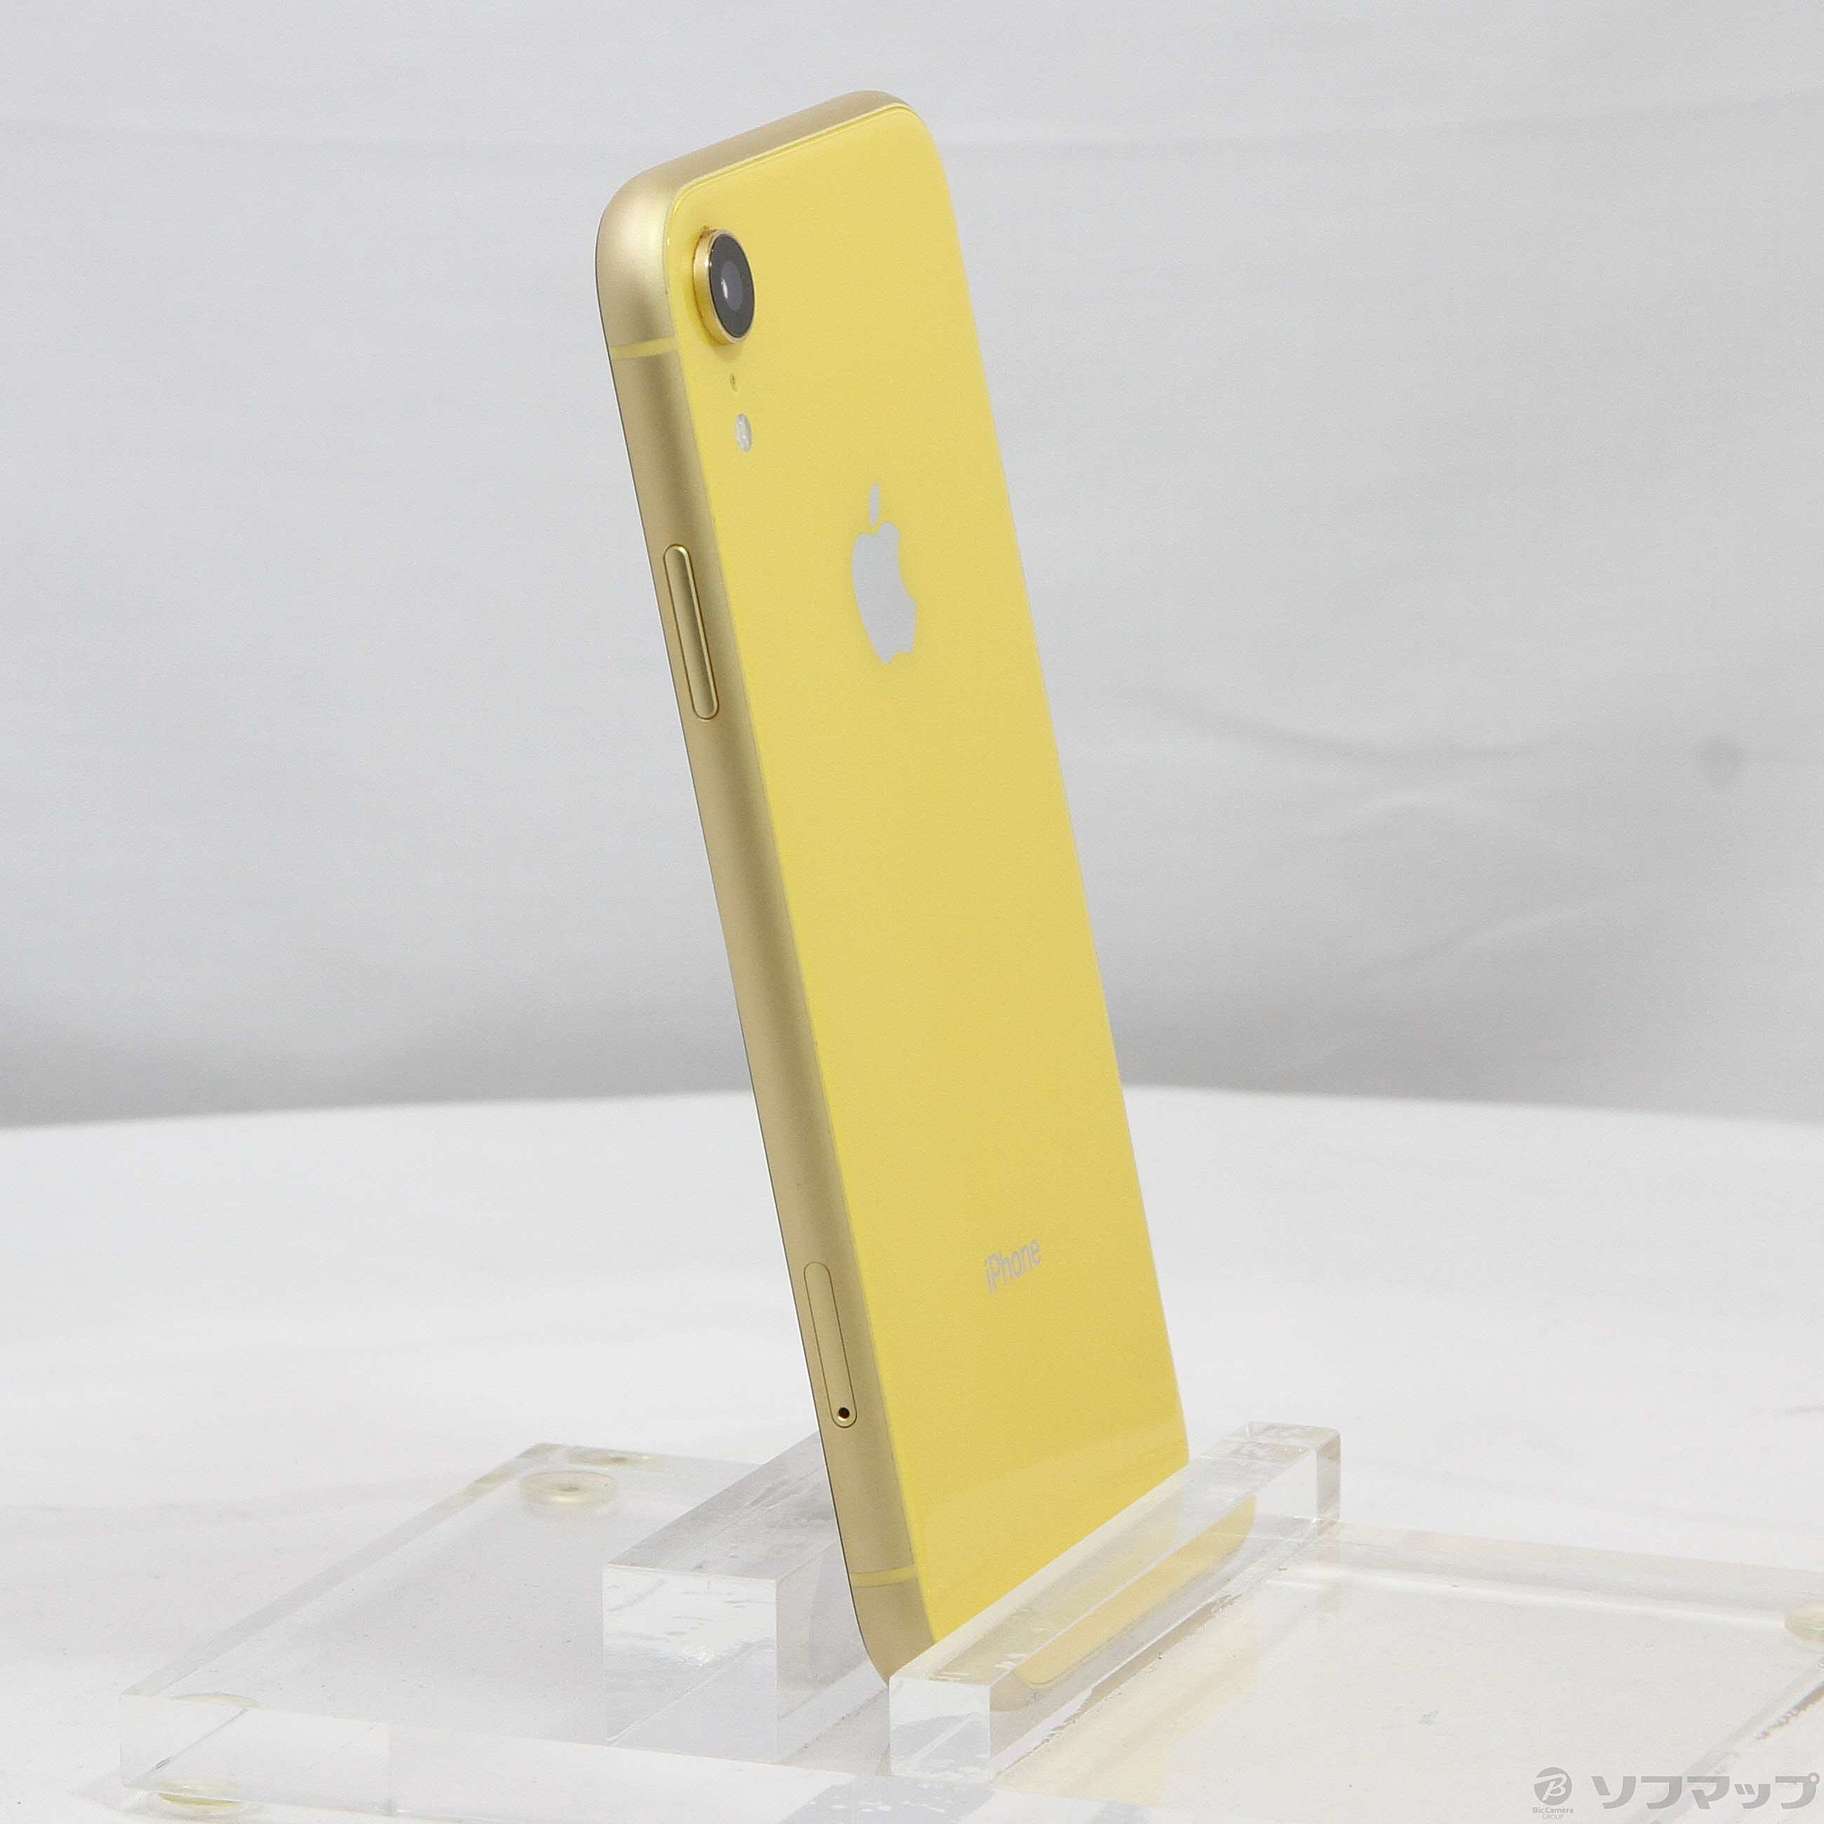 iPhone XR 64GB SIMフリー yellow イエロー+付属品アップル